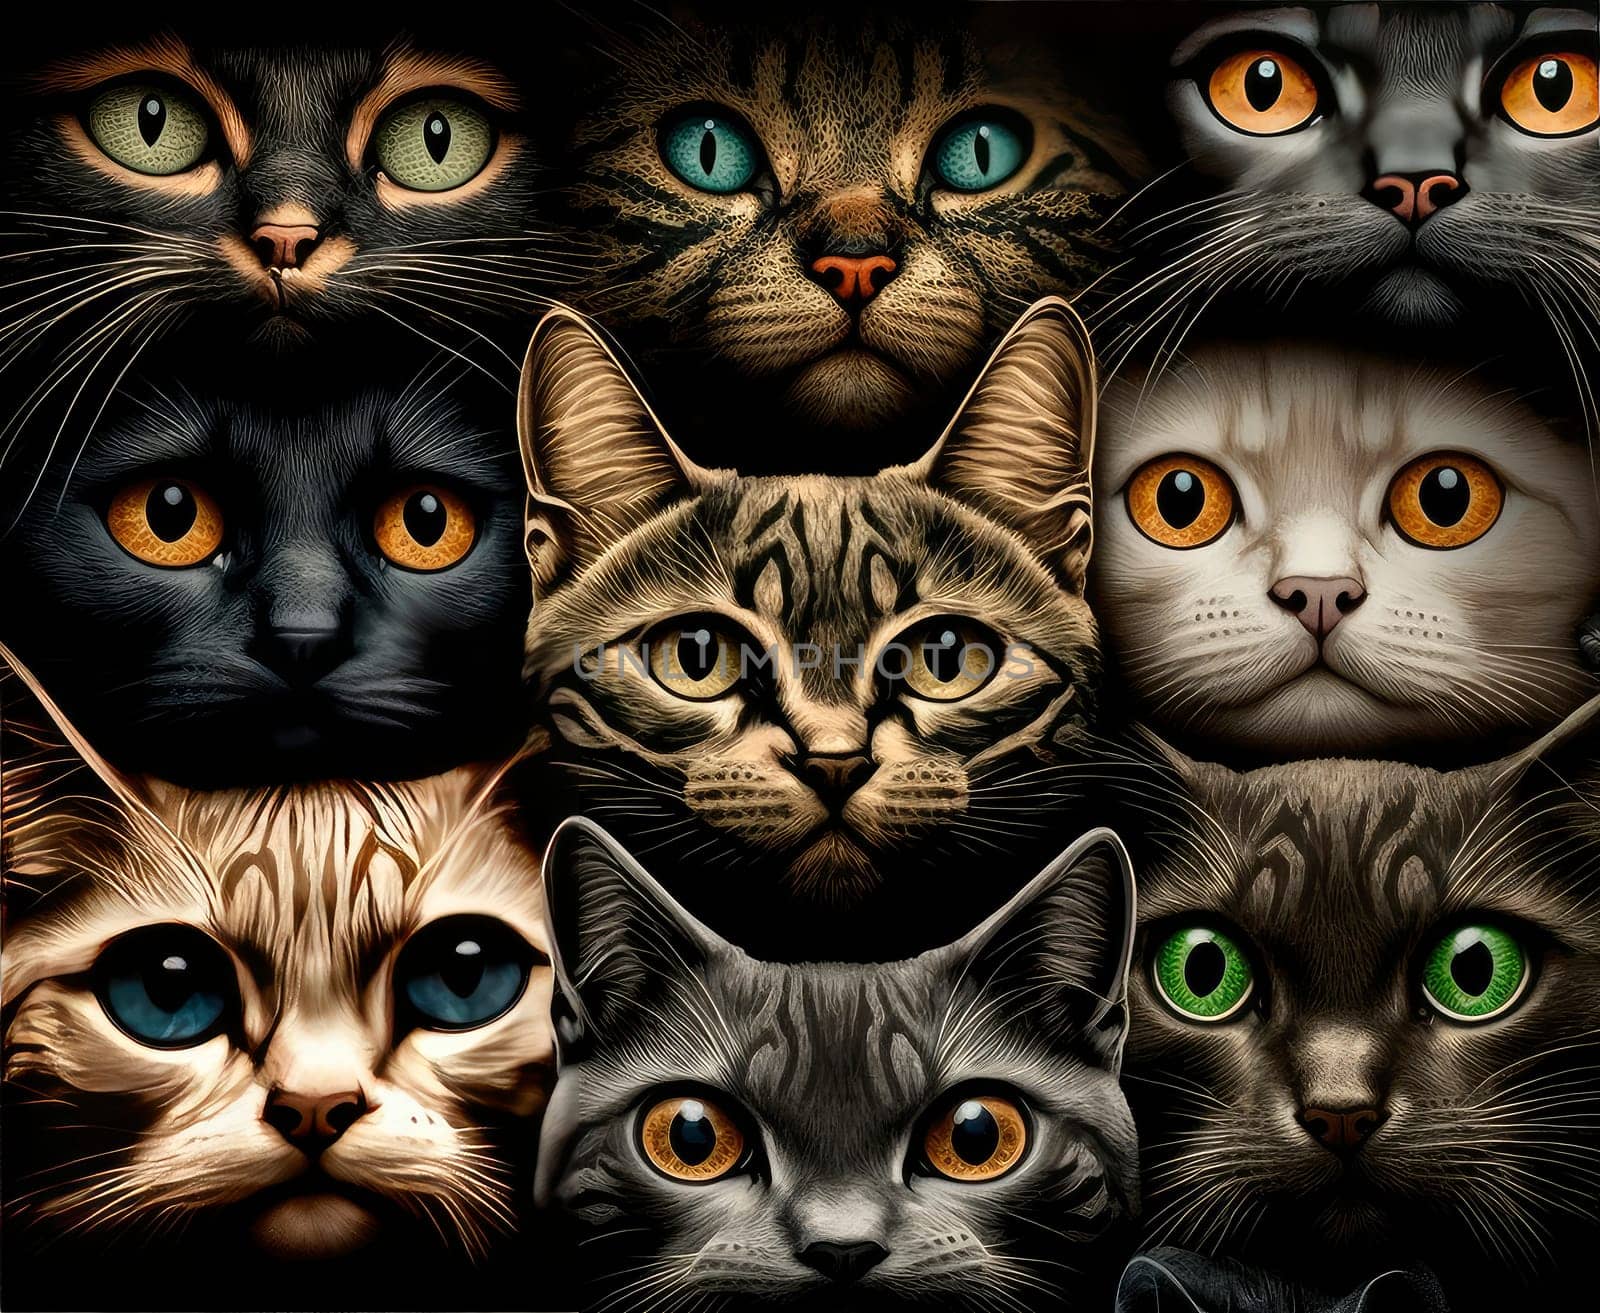 Cat heads lot background pattern. by yanadjana